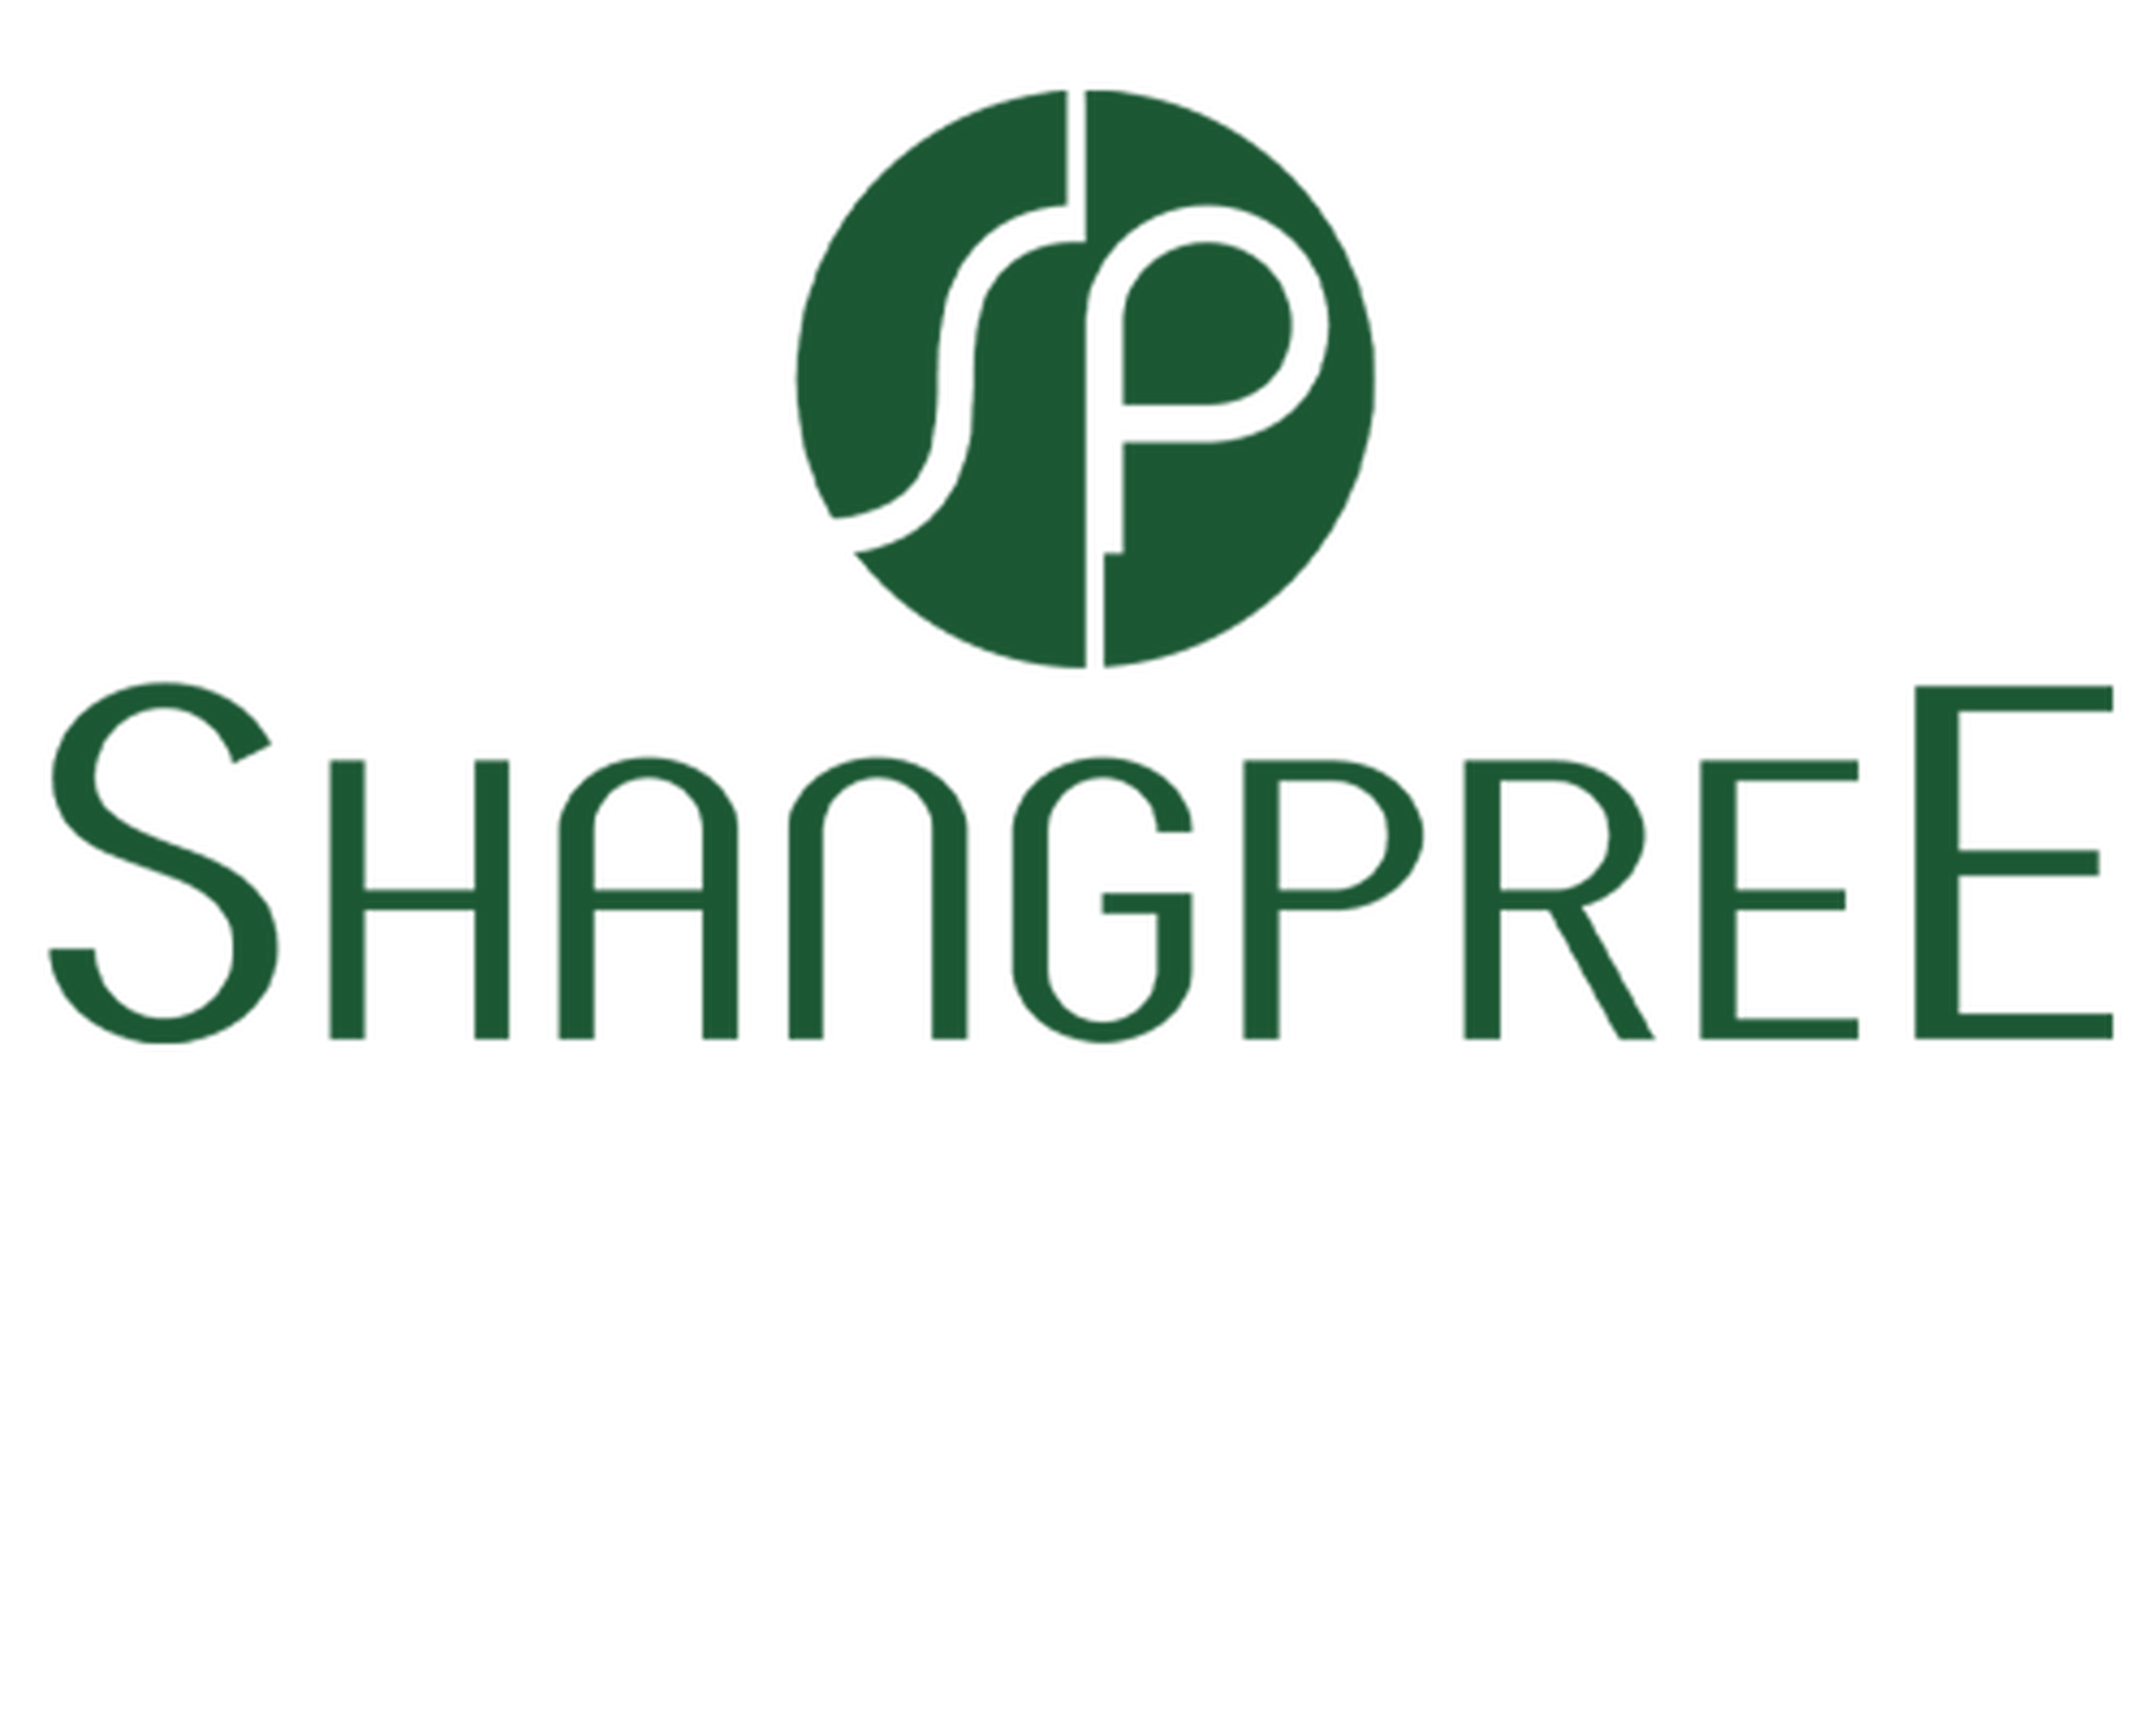 Shangpree logotype